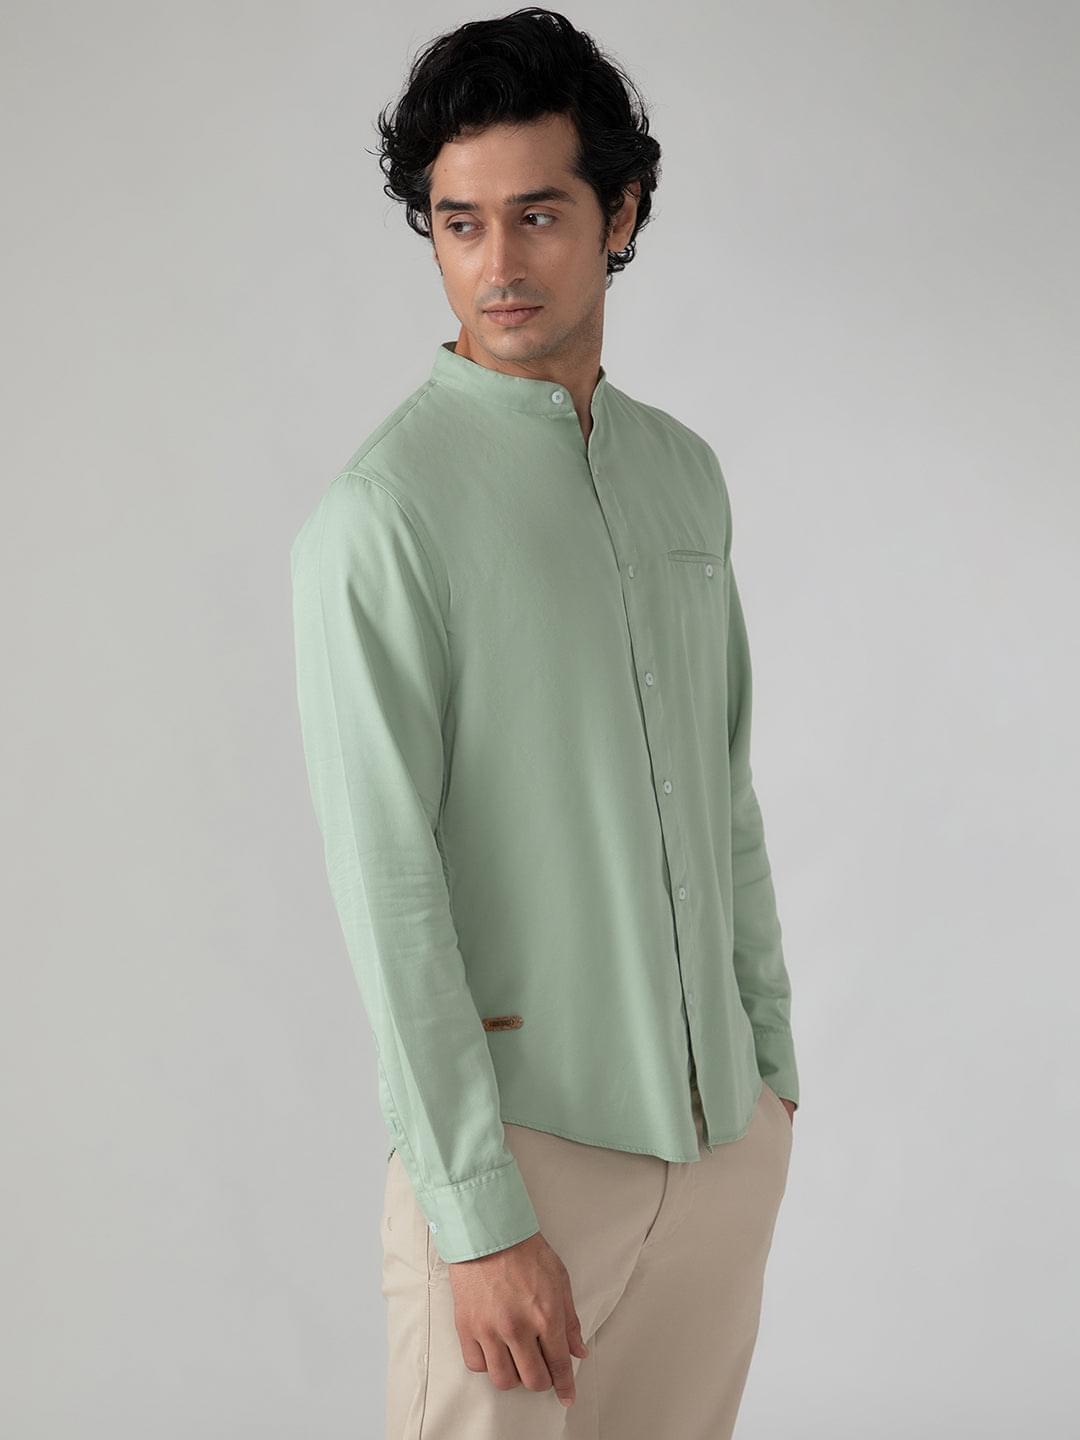 Cotton Tencel Shirt in Mint Green- Slim Fit